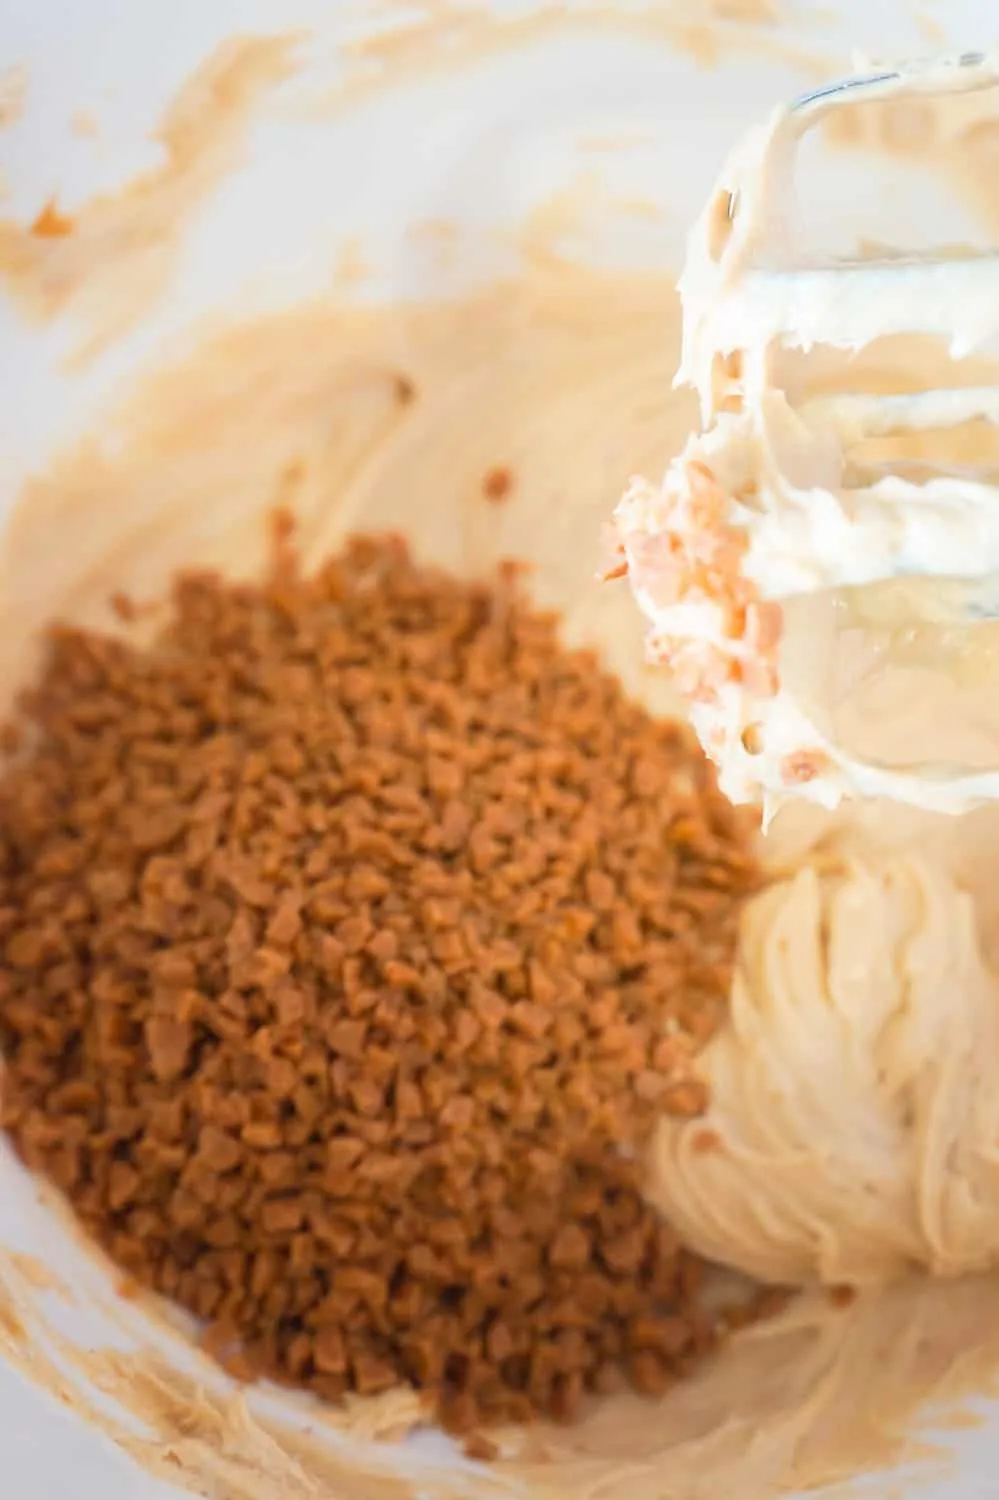 Skor bits in peanut butter cheesecake dip